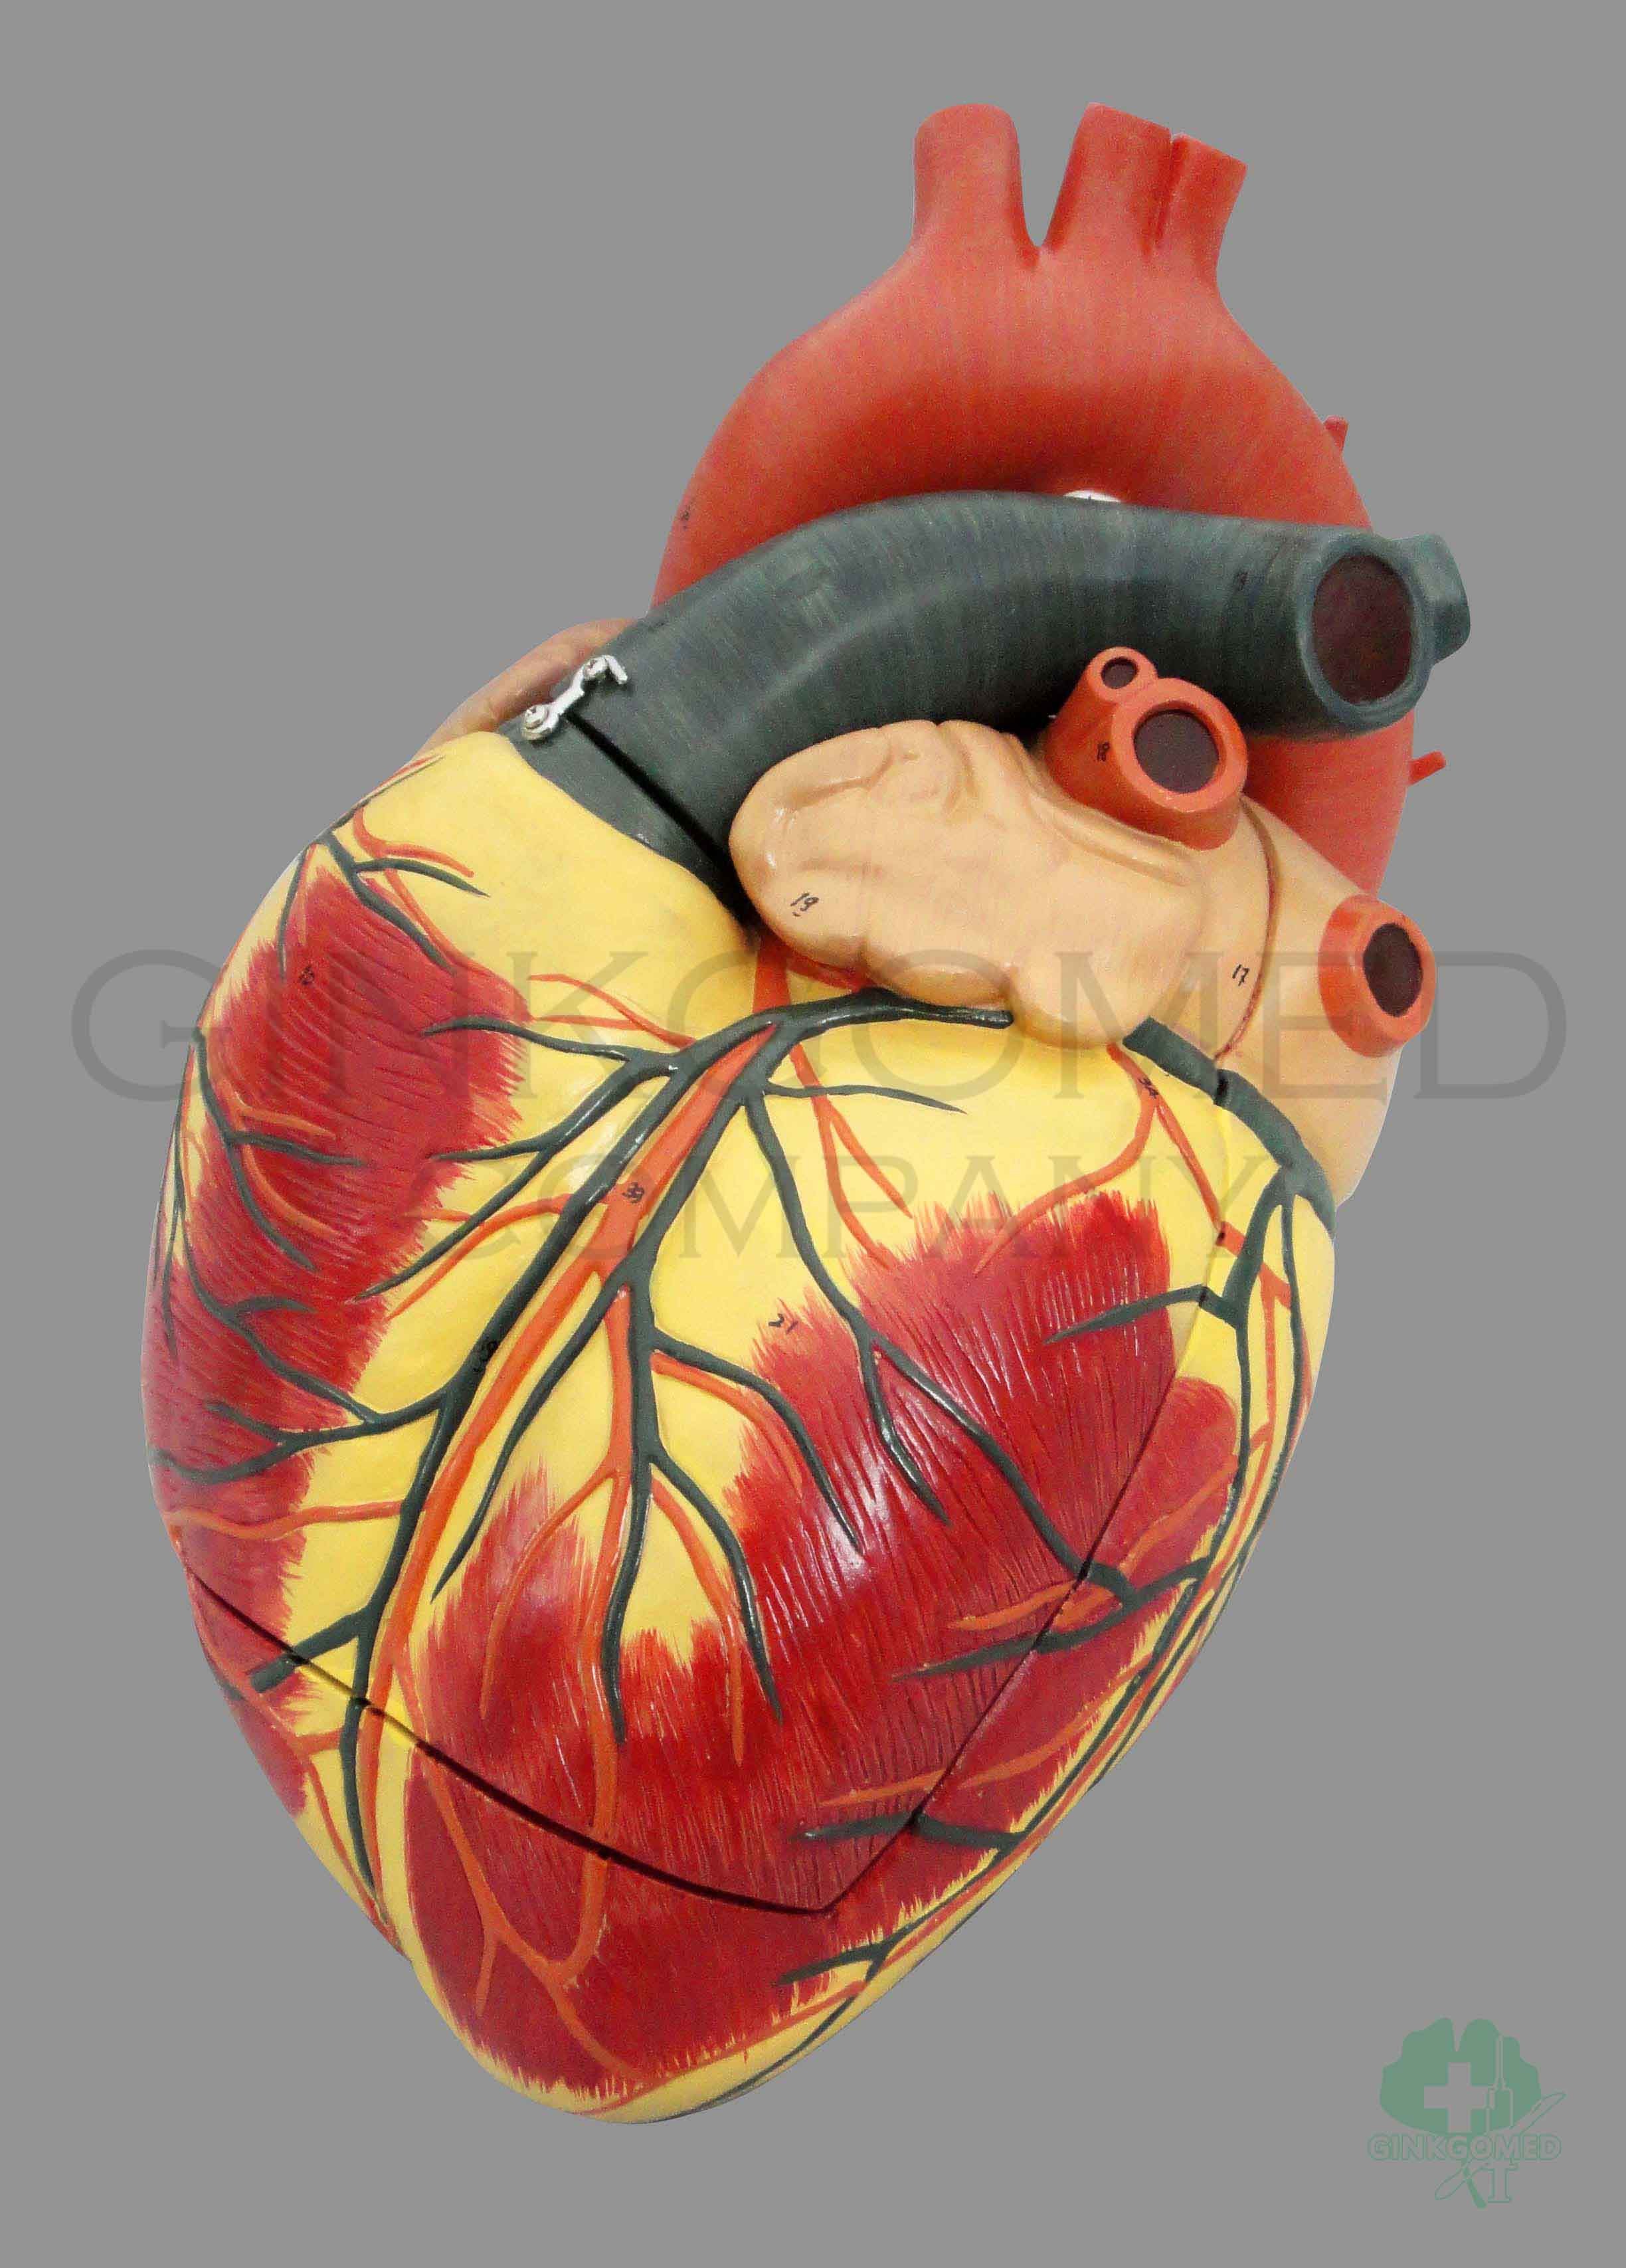 GM-070003  Enlarged Heart